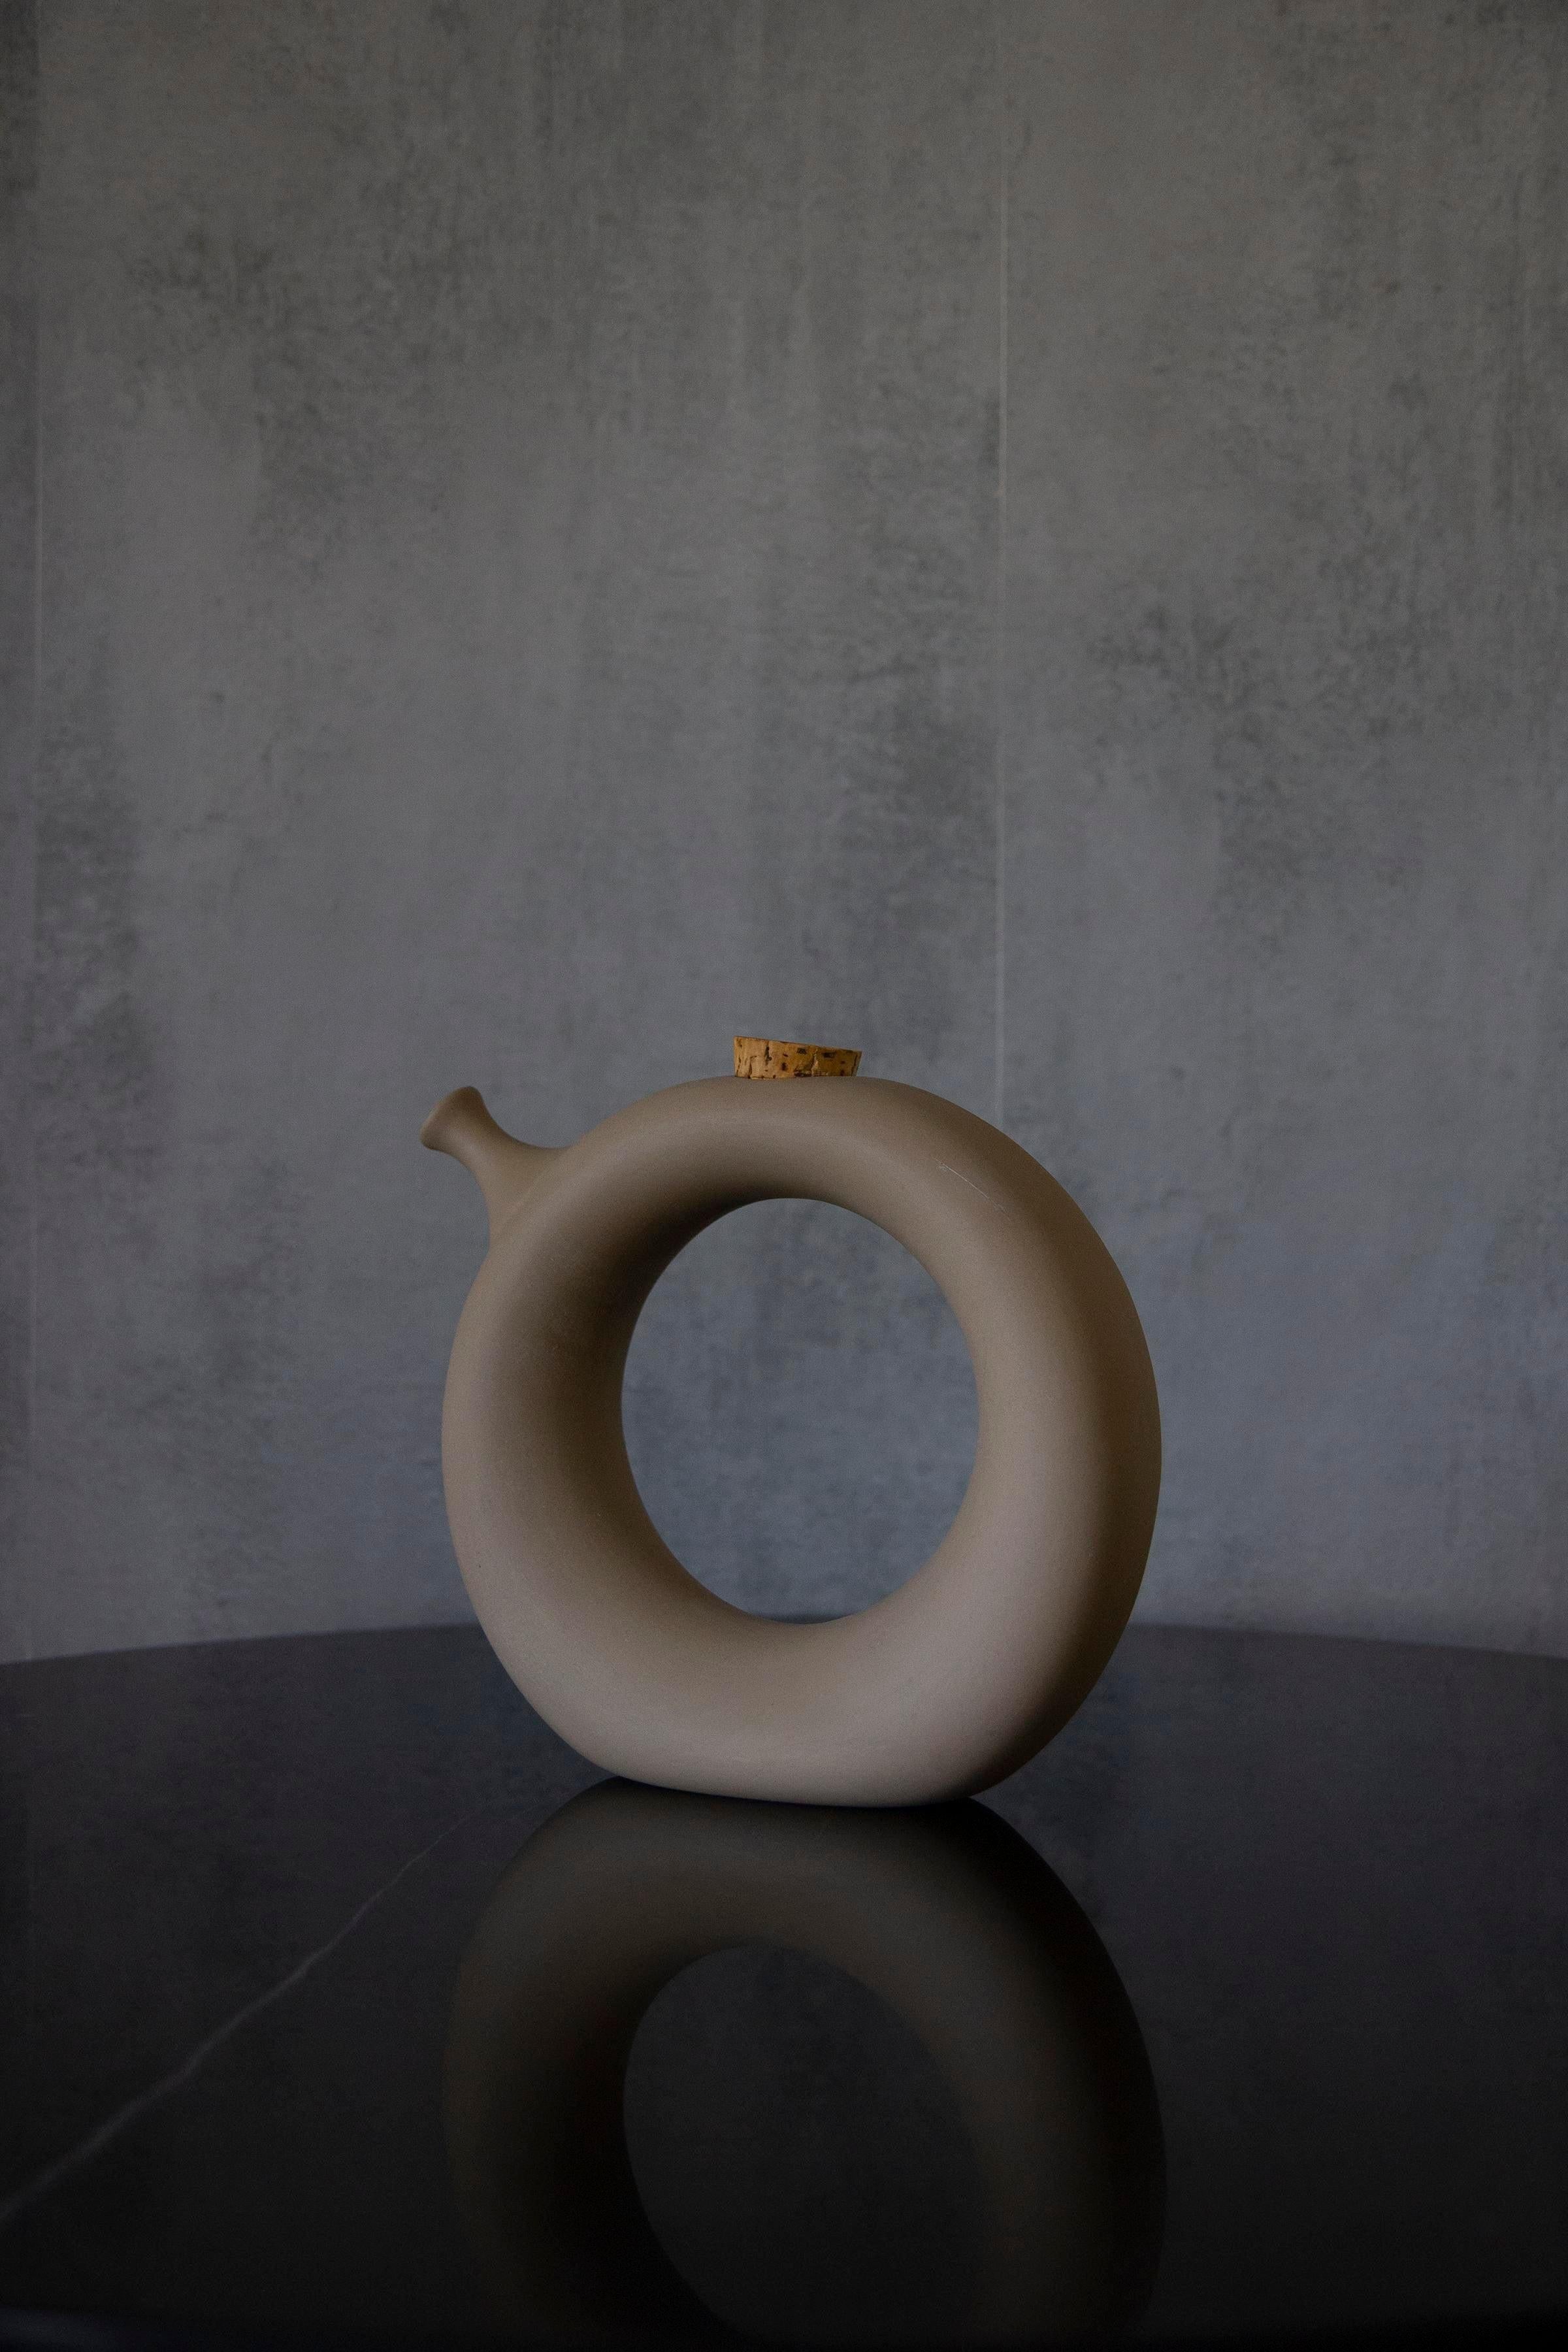 Mid-Century Modern period donut shape pottery pitcher jug by Hartstone pottery.